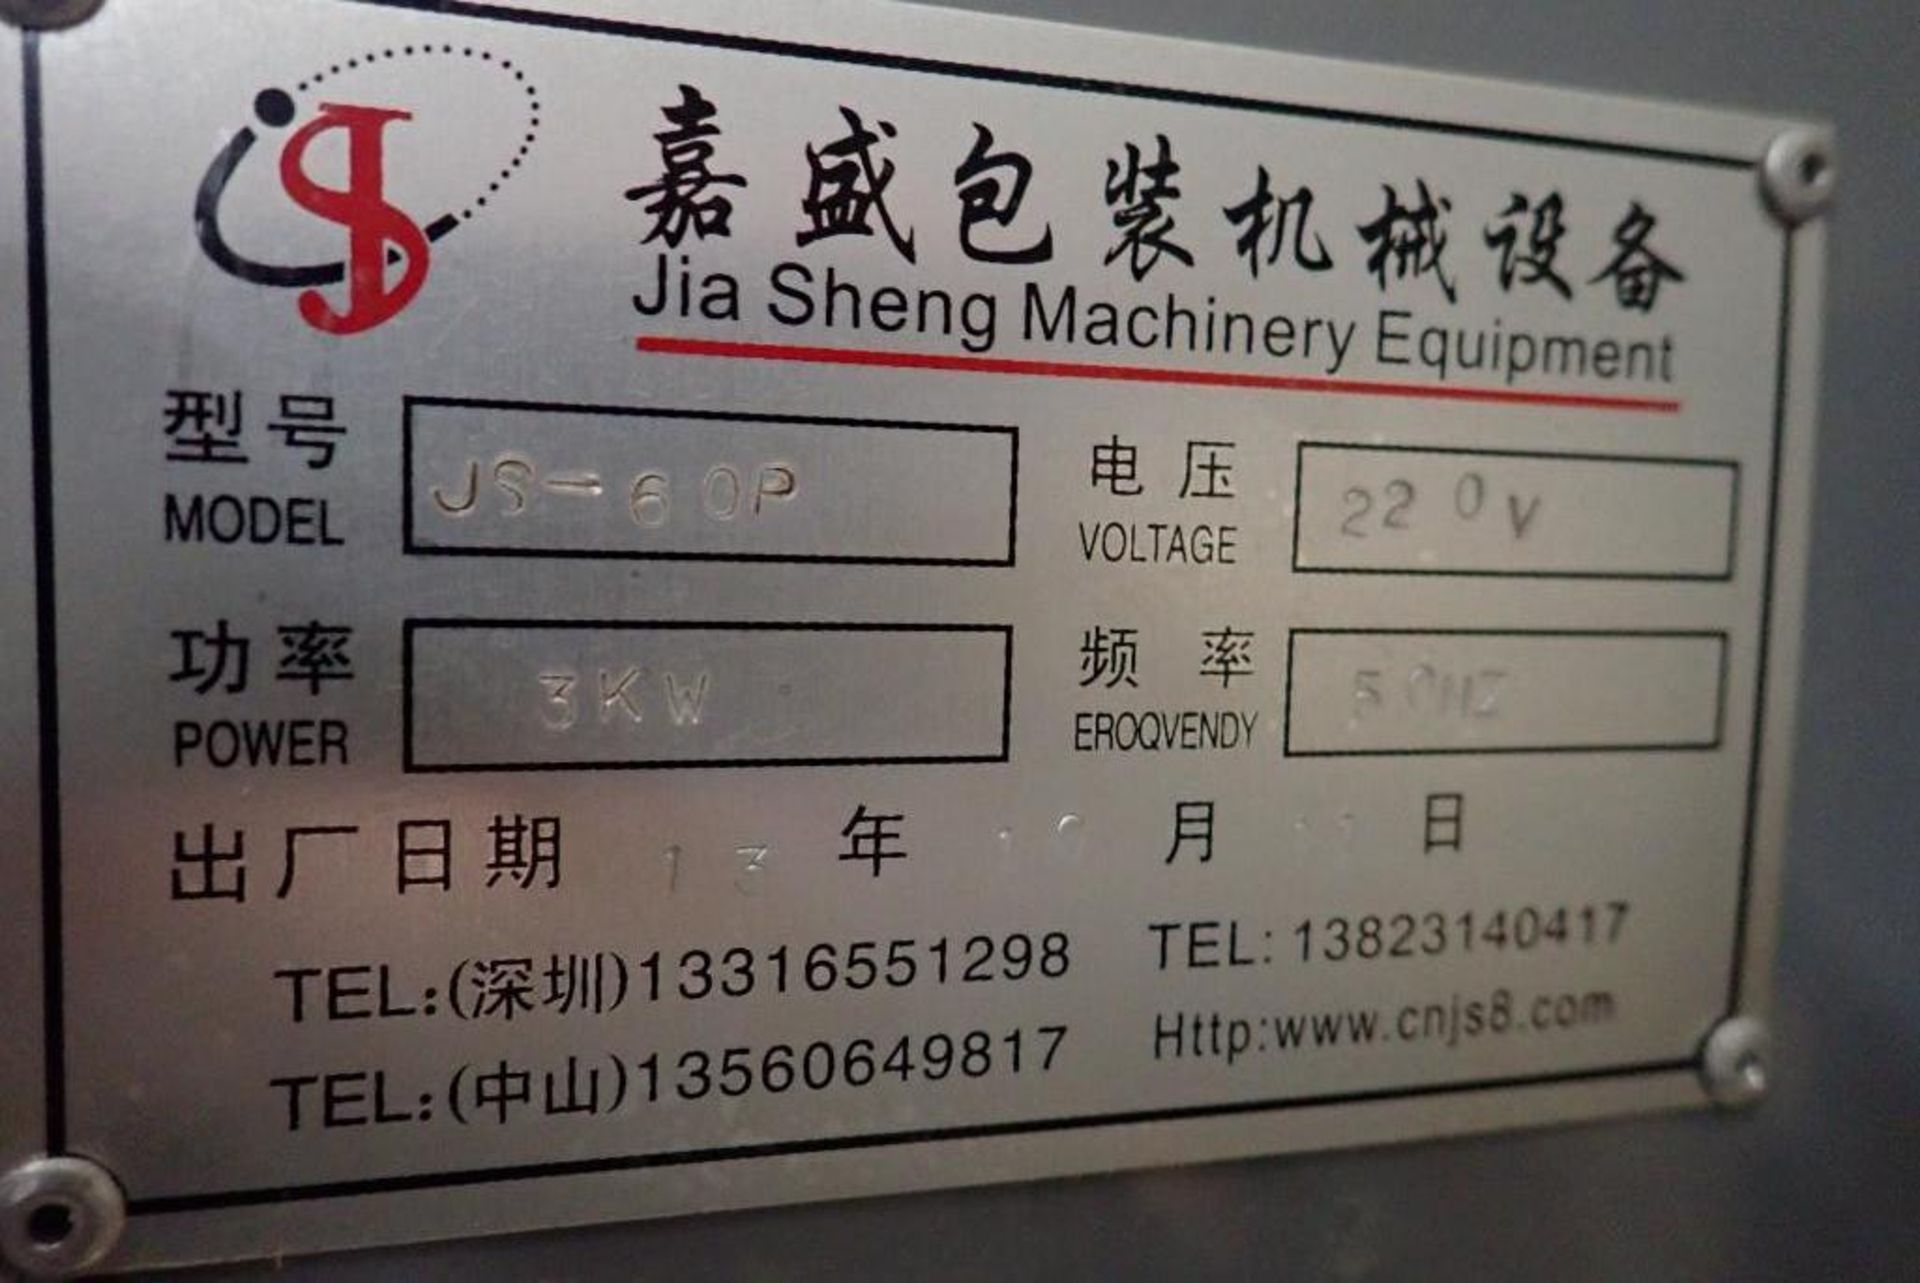 Jia Sheng JS-60P Automatic Impulse Blister Sealing Machine. - Image 7 of 7